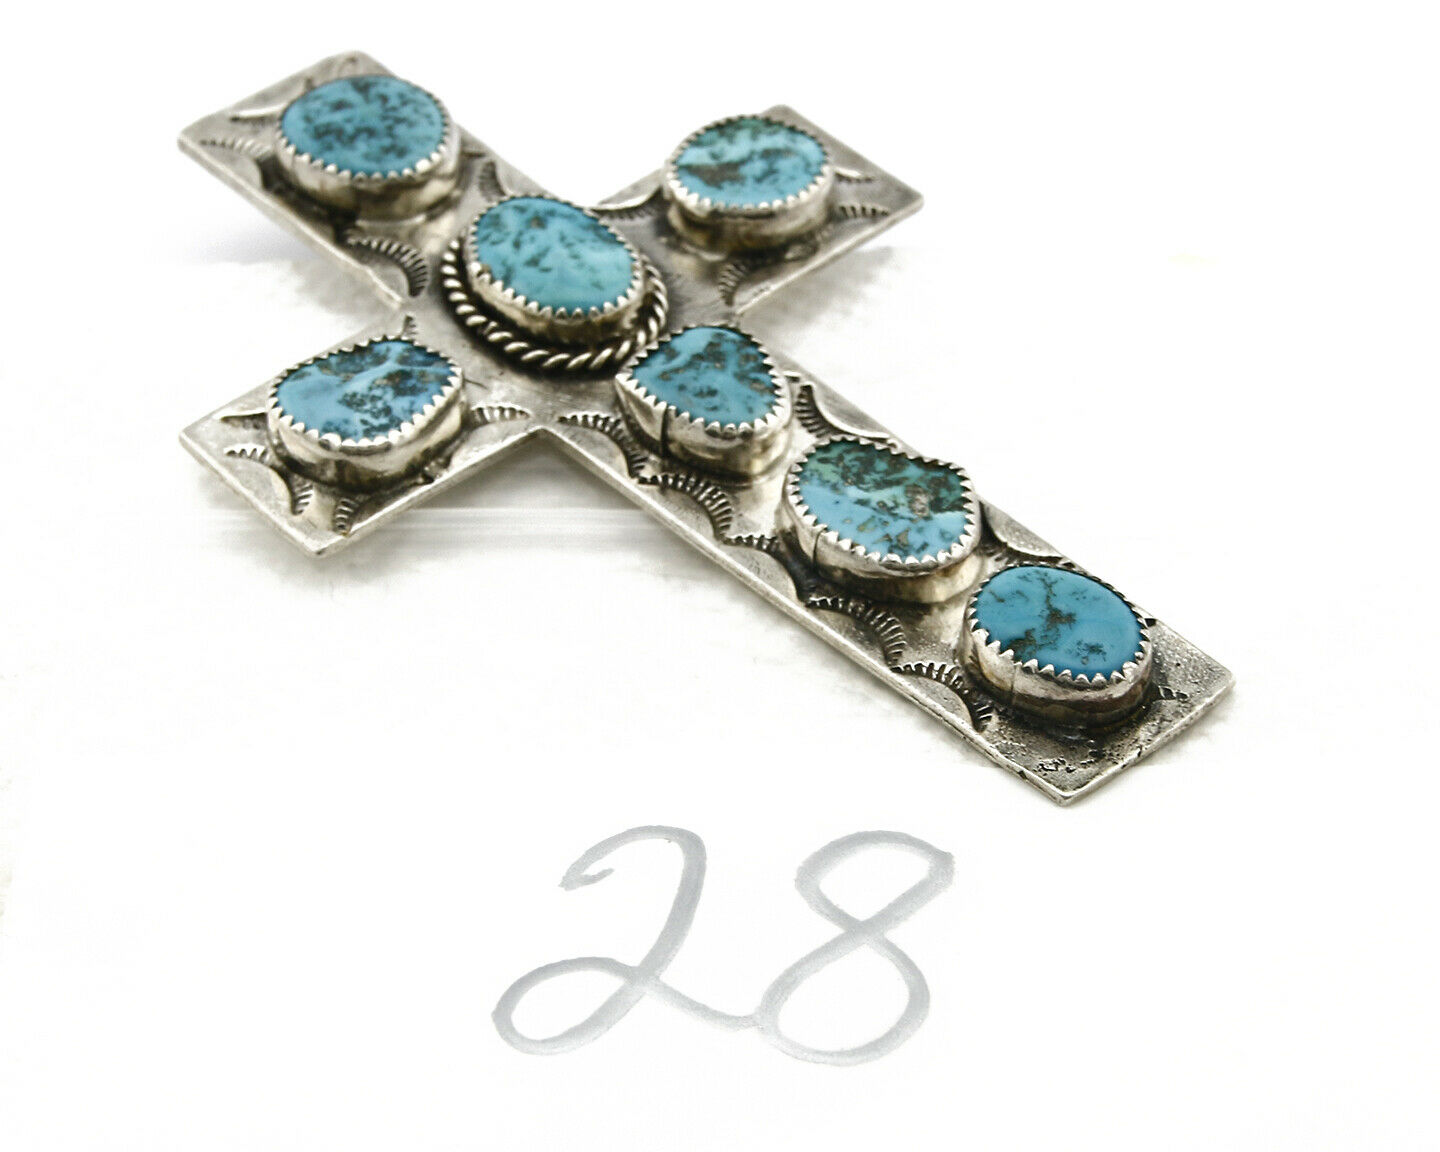 Navajo Cross Pendant .925 Silver Kingman Turquoise Artist C-E Circa 80's